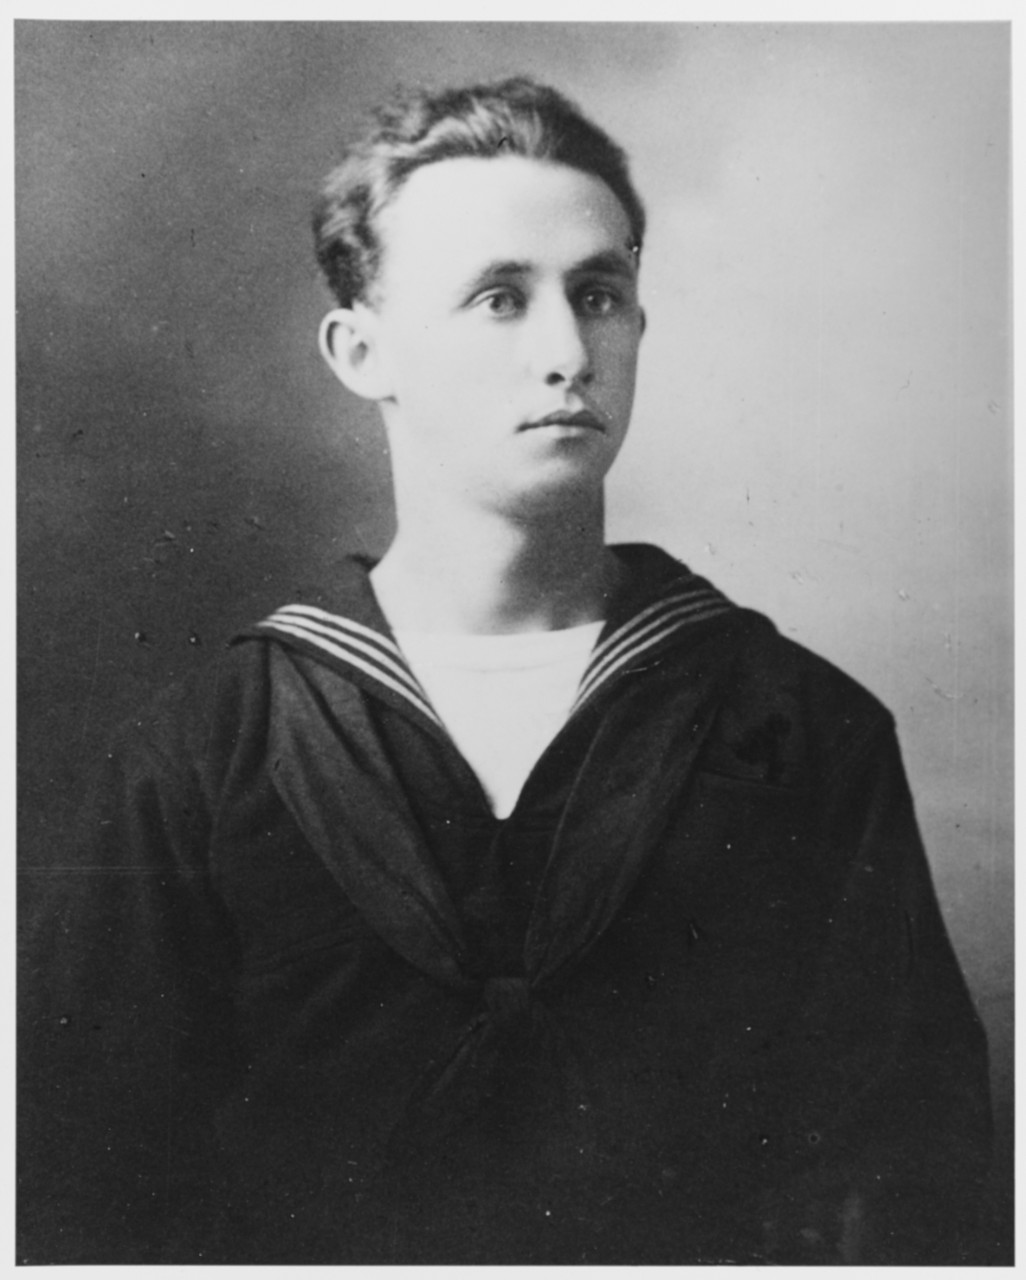 Seaman William J. Beglin, USN